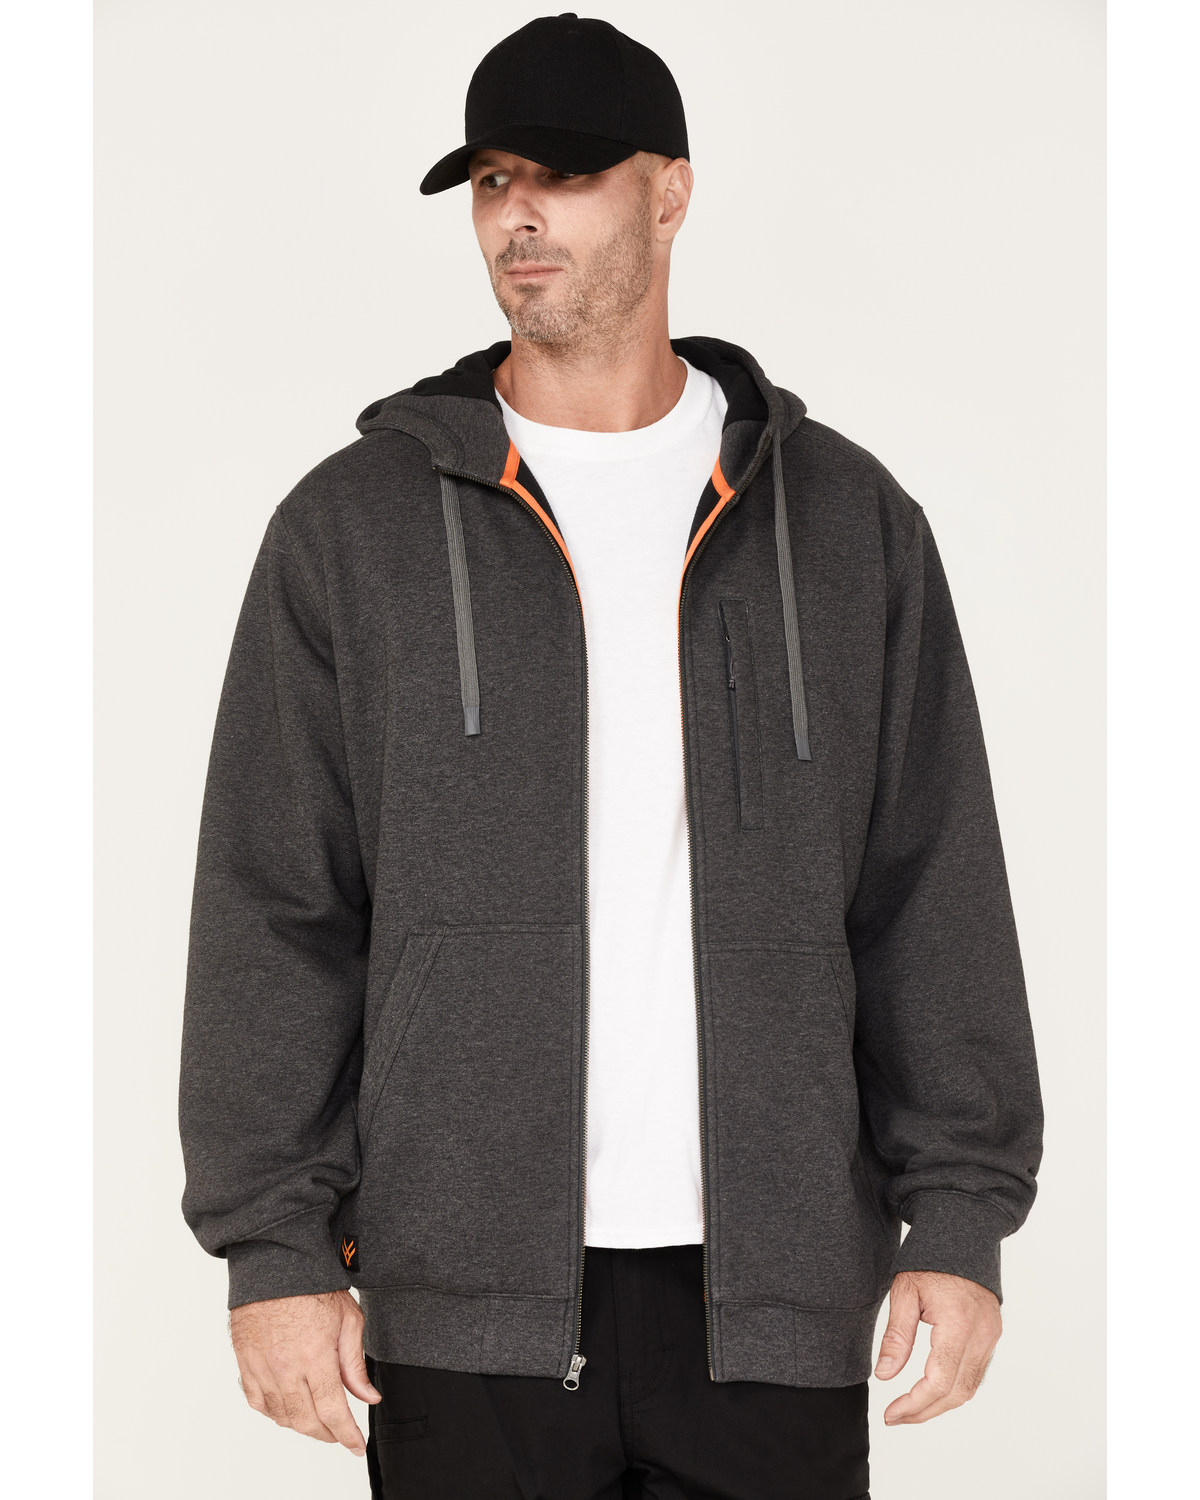 Hawx Men's Logo Thermal Hooded Zip Jacket